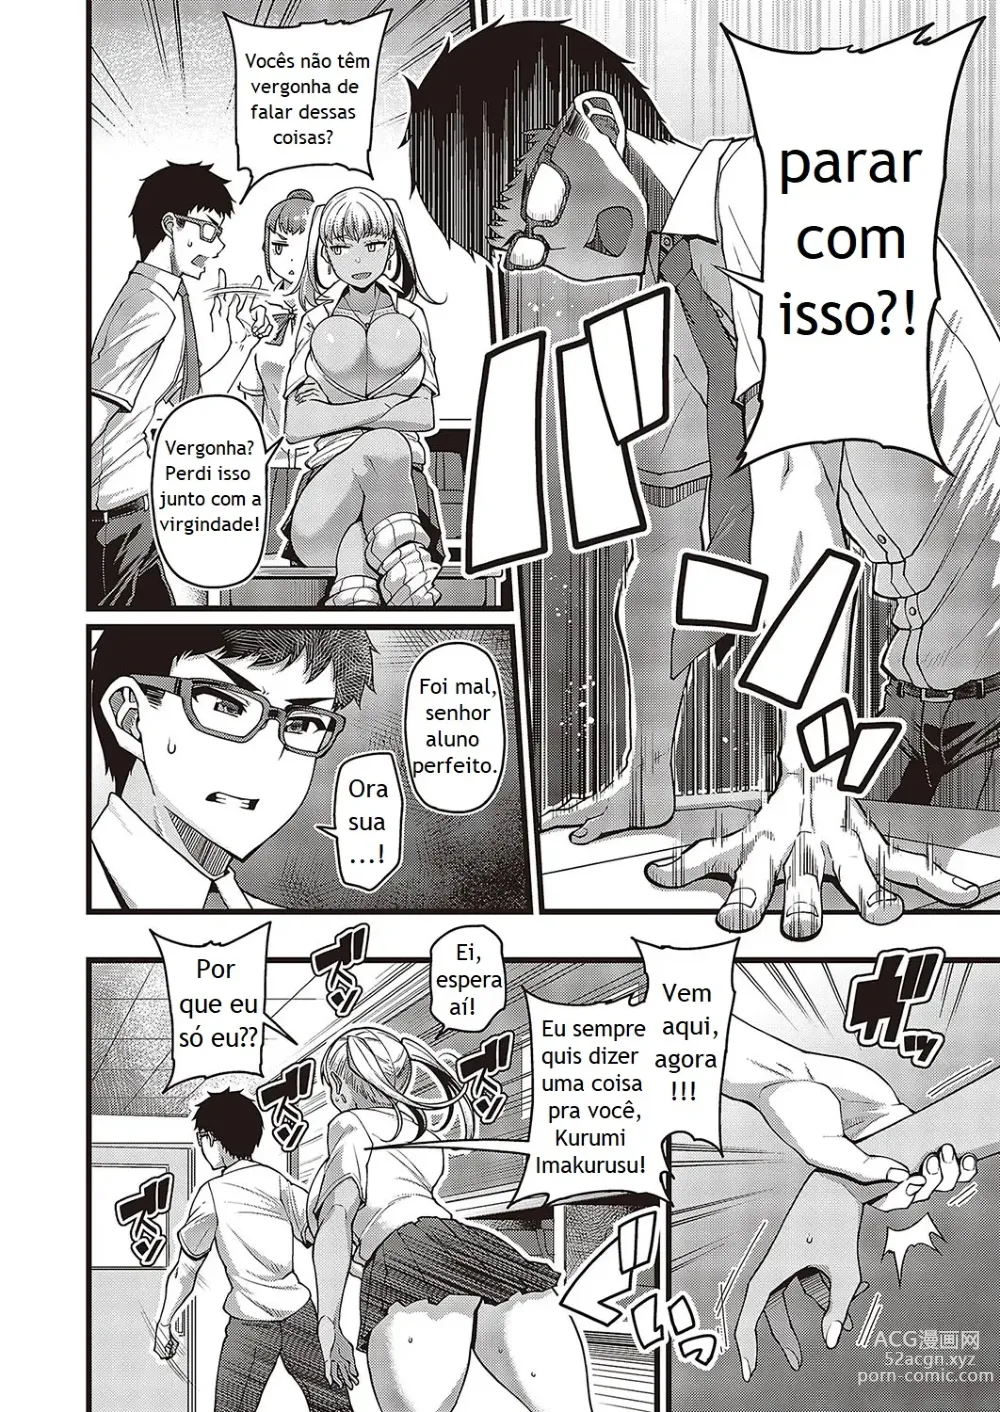 Page 2 of manga Way to Go!